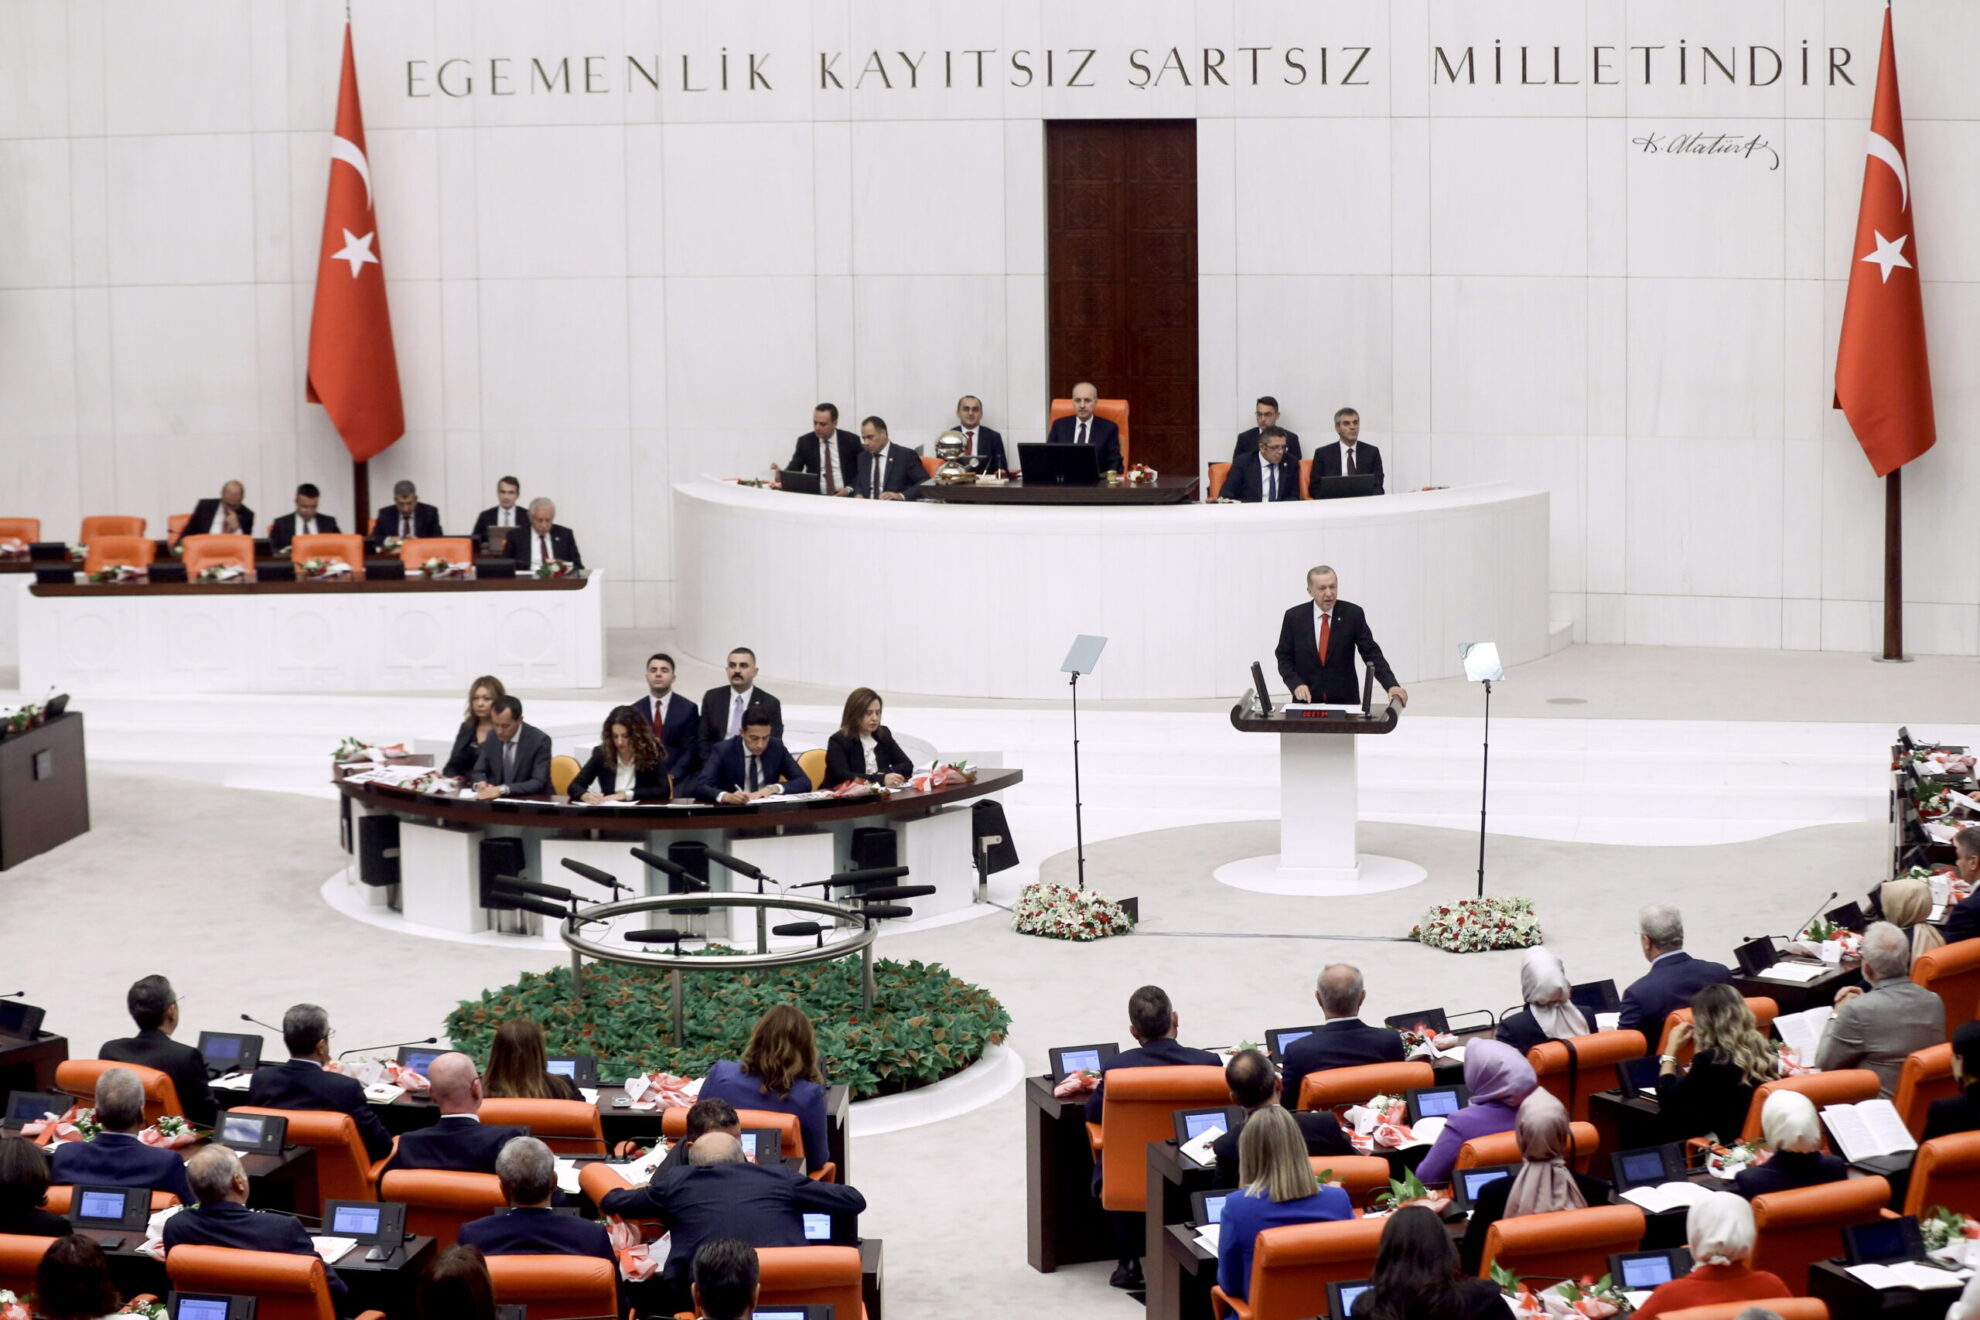 H Τουρκική Εθνοσυνέλευση ενέκρινε το πρωτόκολλο προσχώρησης της Σουηδίας στο ΝΑΤΟ